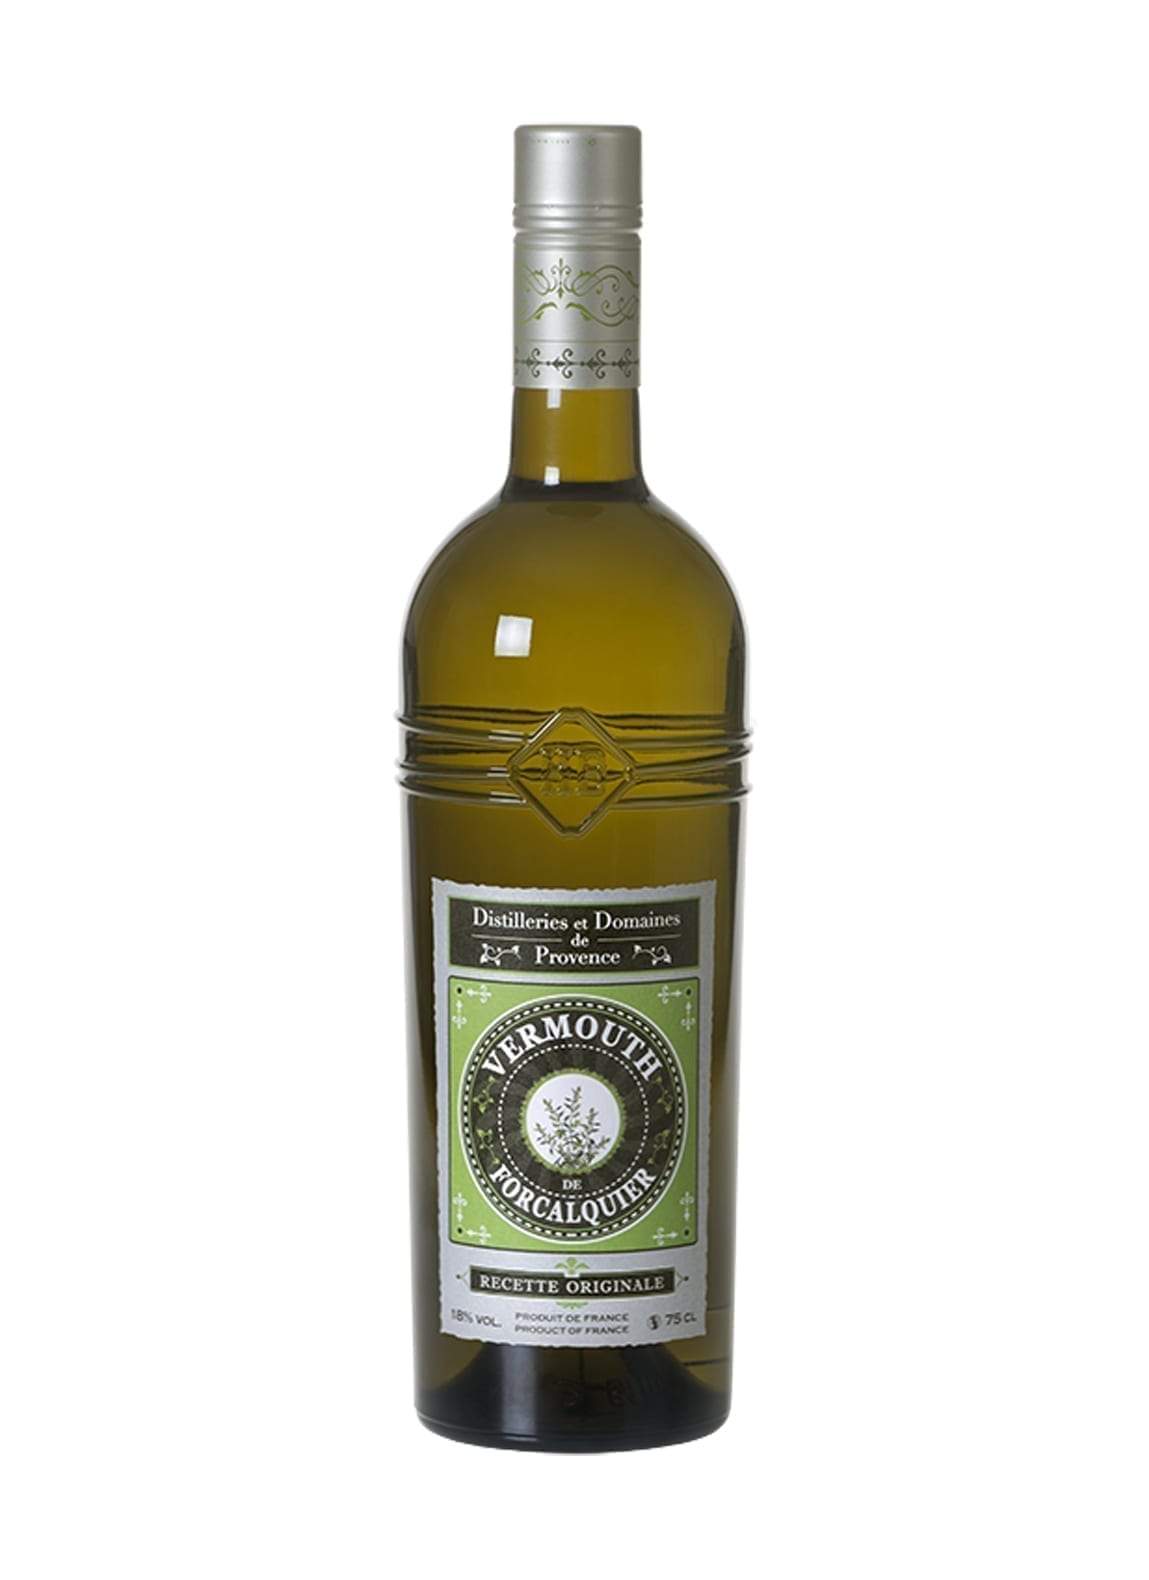 Distilleries et Domaines de Provence Vermouth Forcalquier 18% 750ml | Liquor & Spirits | Shop online at Spirits of France